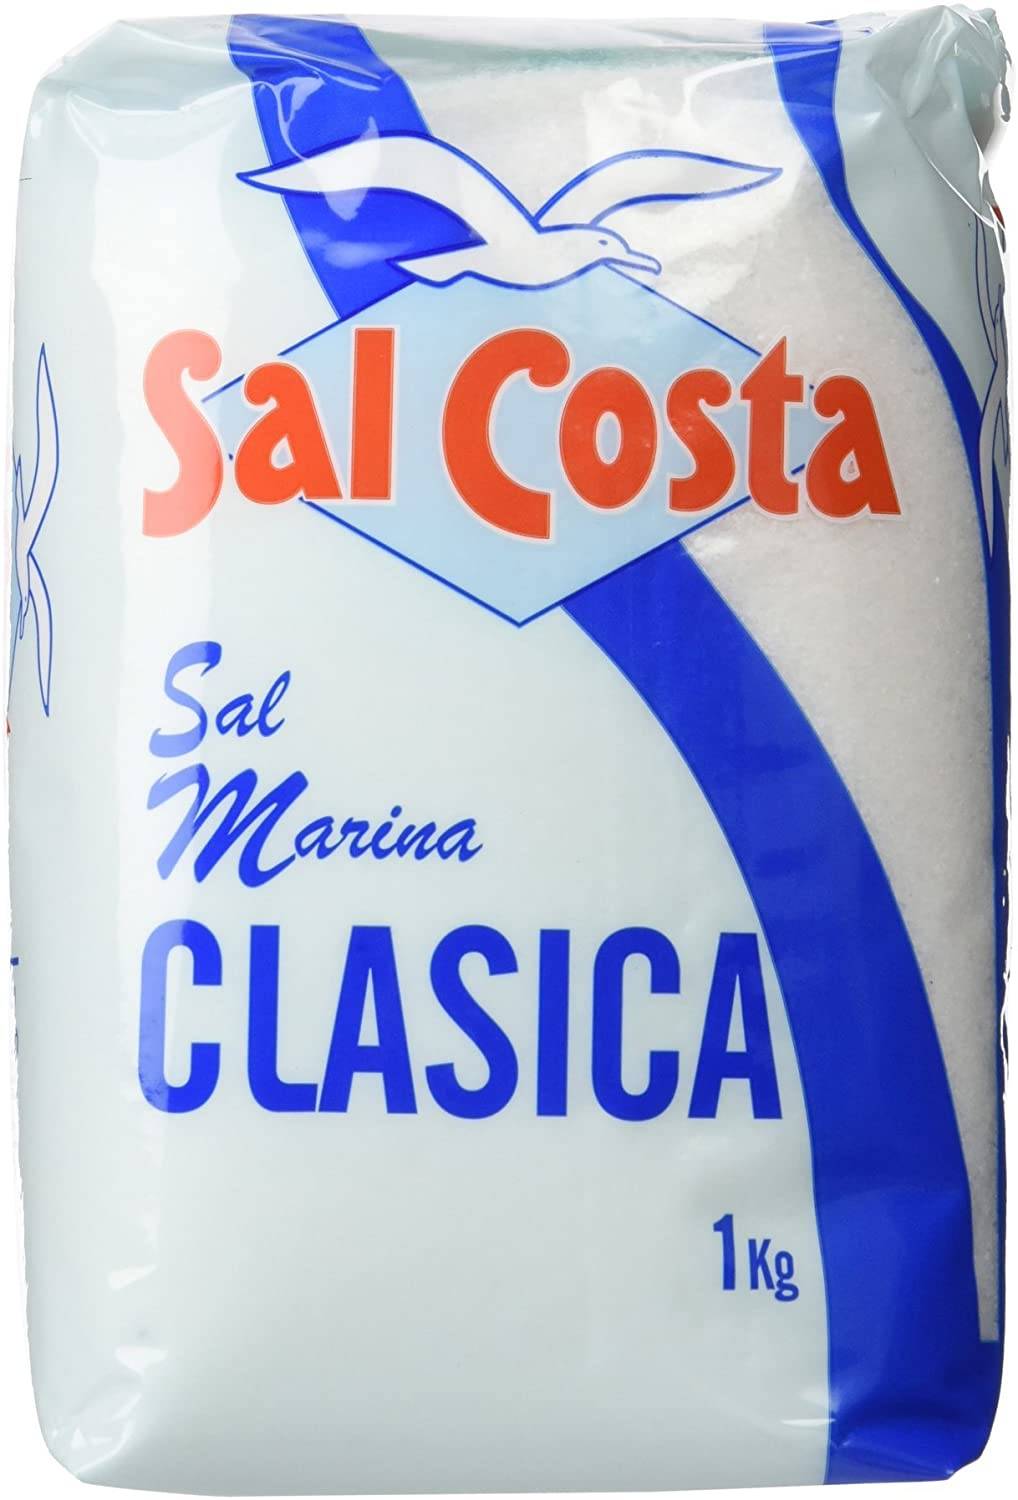 SAL COSTA NATURAL PLAST.1K